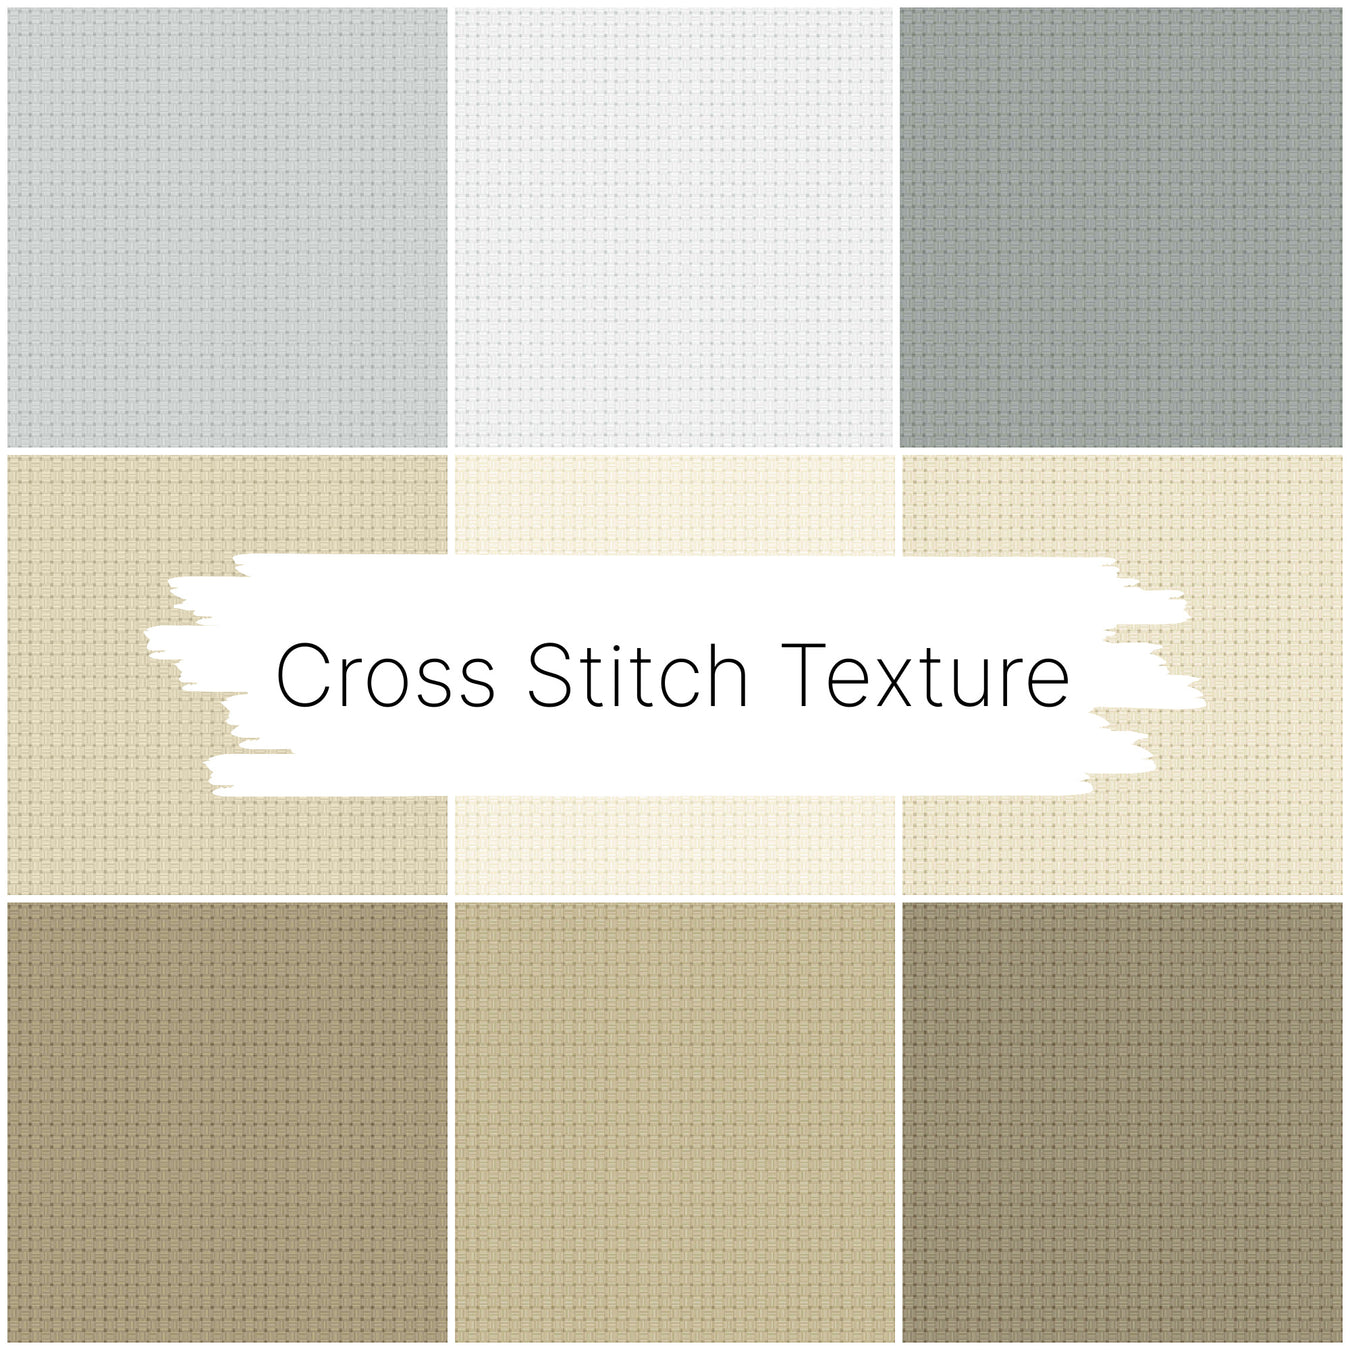 Cross Stitch Texture